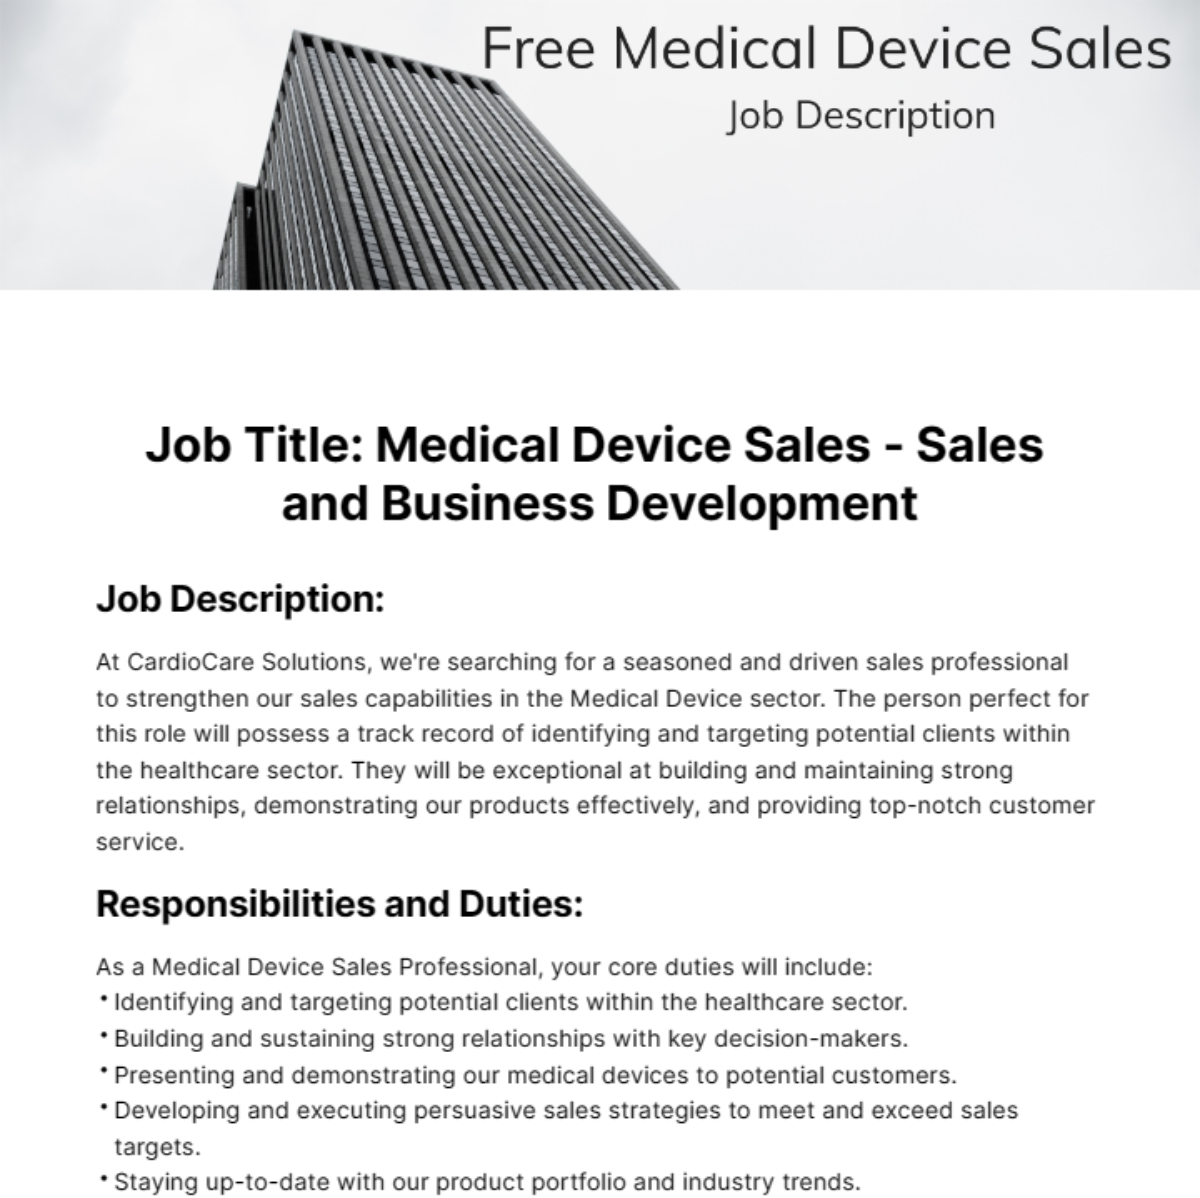 Medical Device Sales Job Description Template